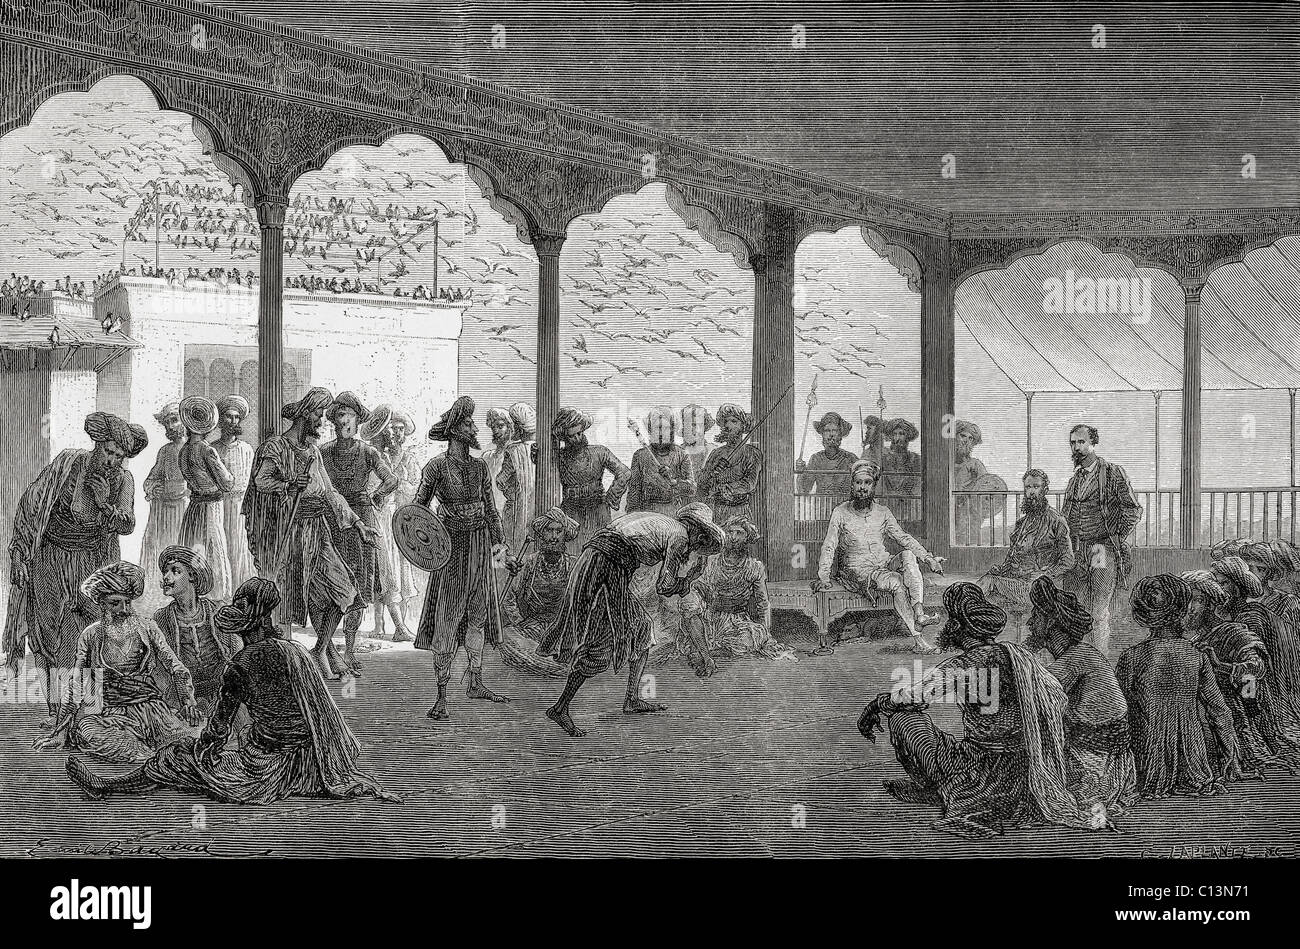 The court of the Gaekwad, the ruling prince or Maharaja Gaekwad of Baroda, India, in the 19th century. Stock Photo